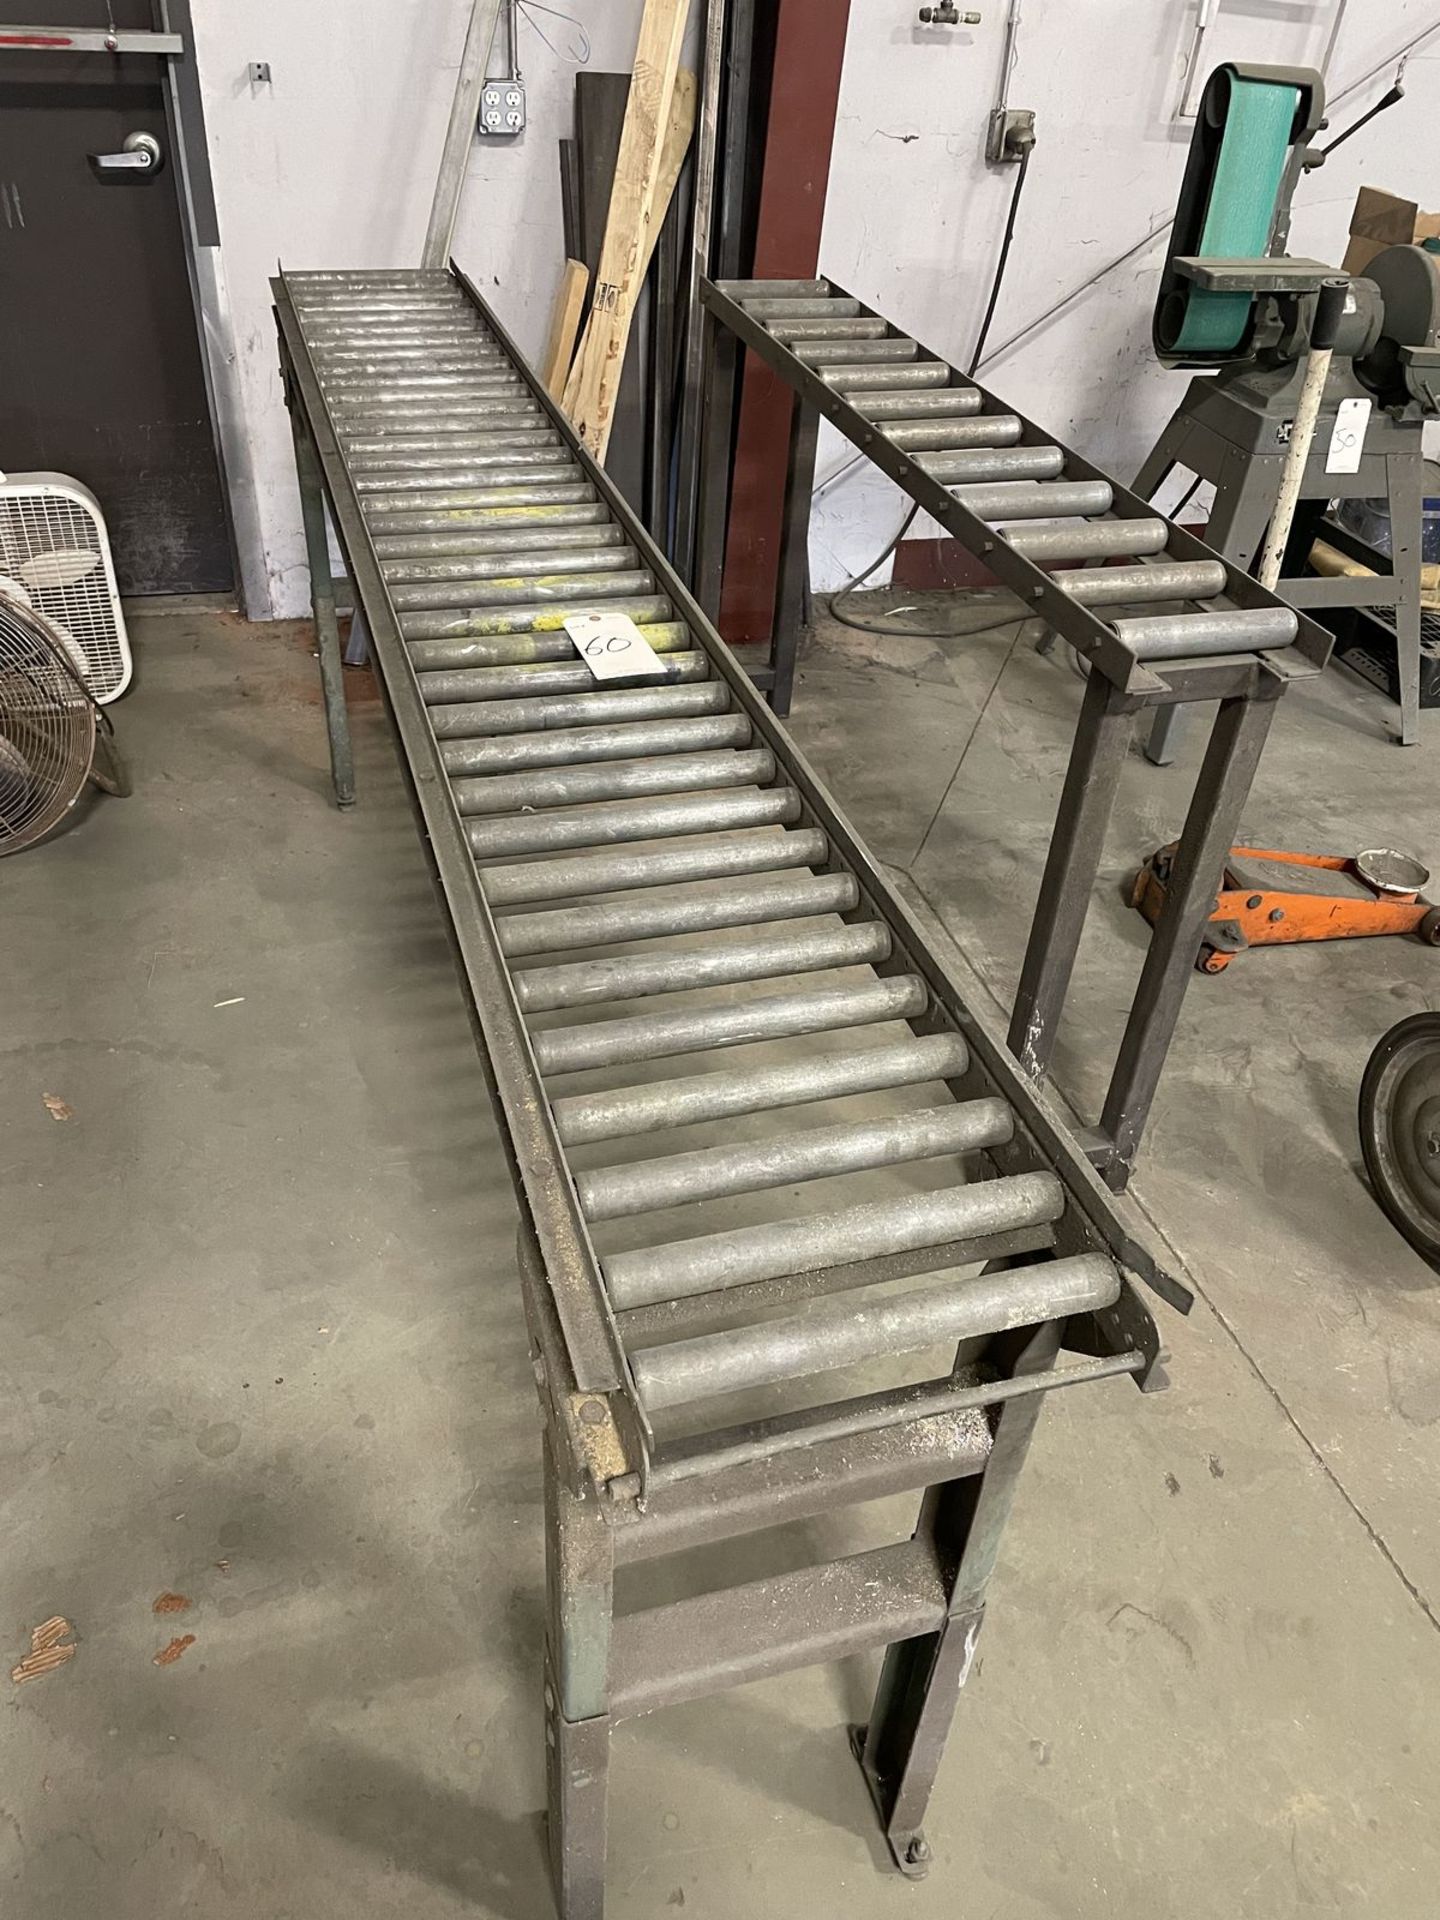 2 Roller Conveyors - Larger on is Hytrol Brand